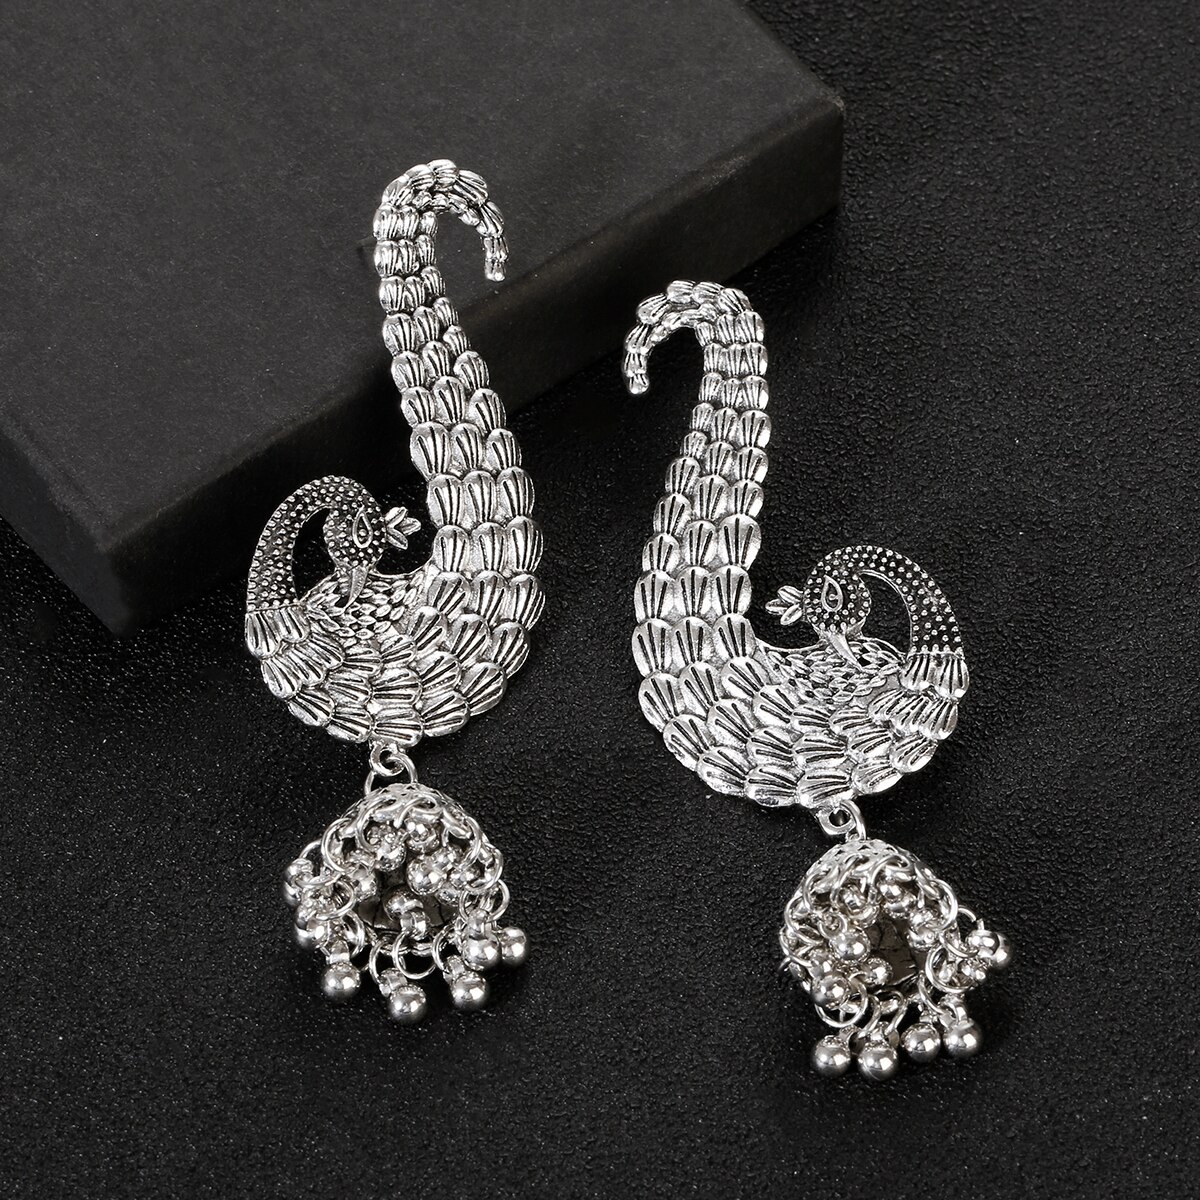 Retro-Luxury-Peacock-Indian-Earrings-For-Women-Ethnic-Gold-Color-Earrings-Piercing-Wedding-Jewelry-A-3256803821359707-2